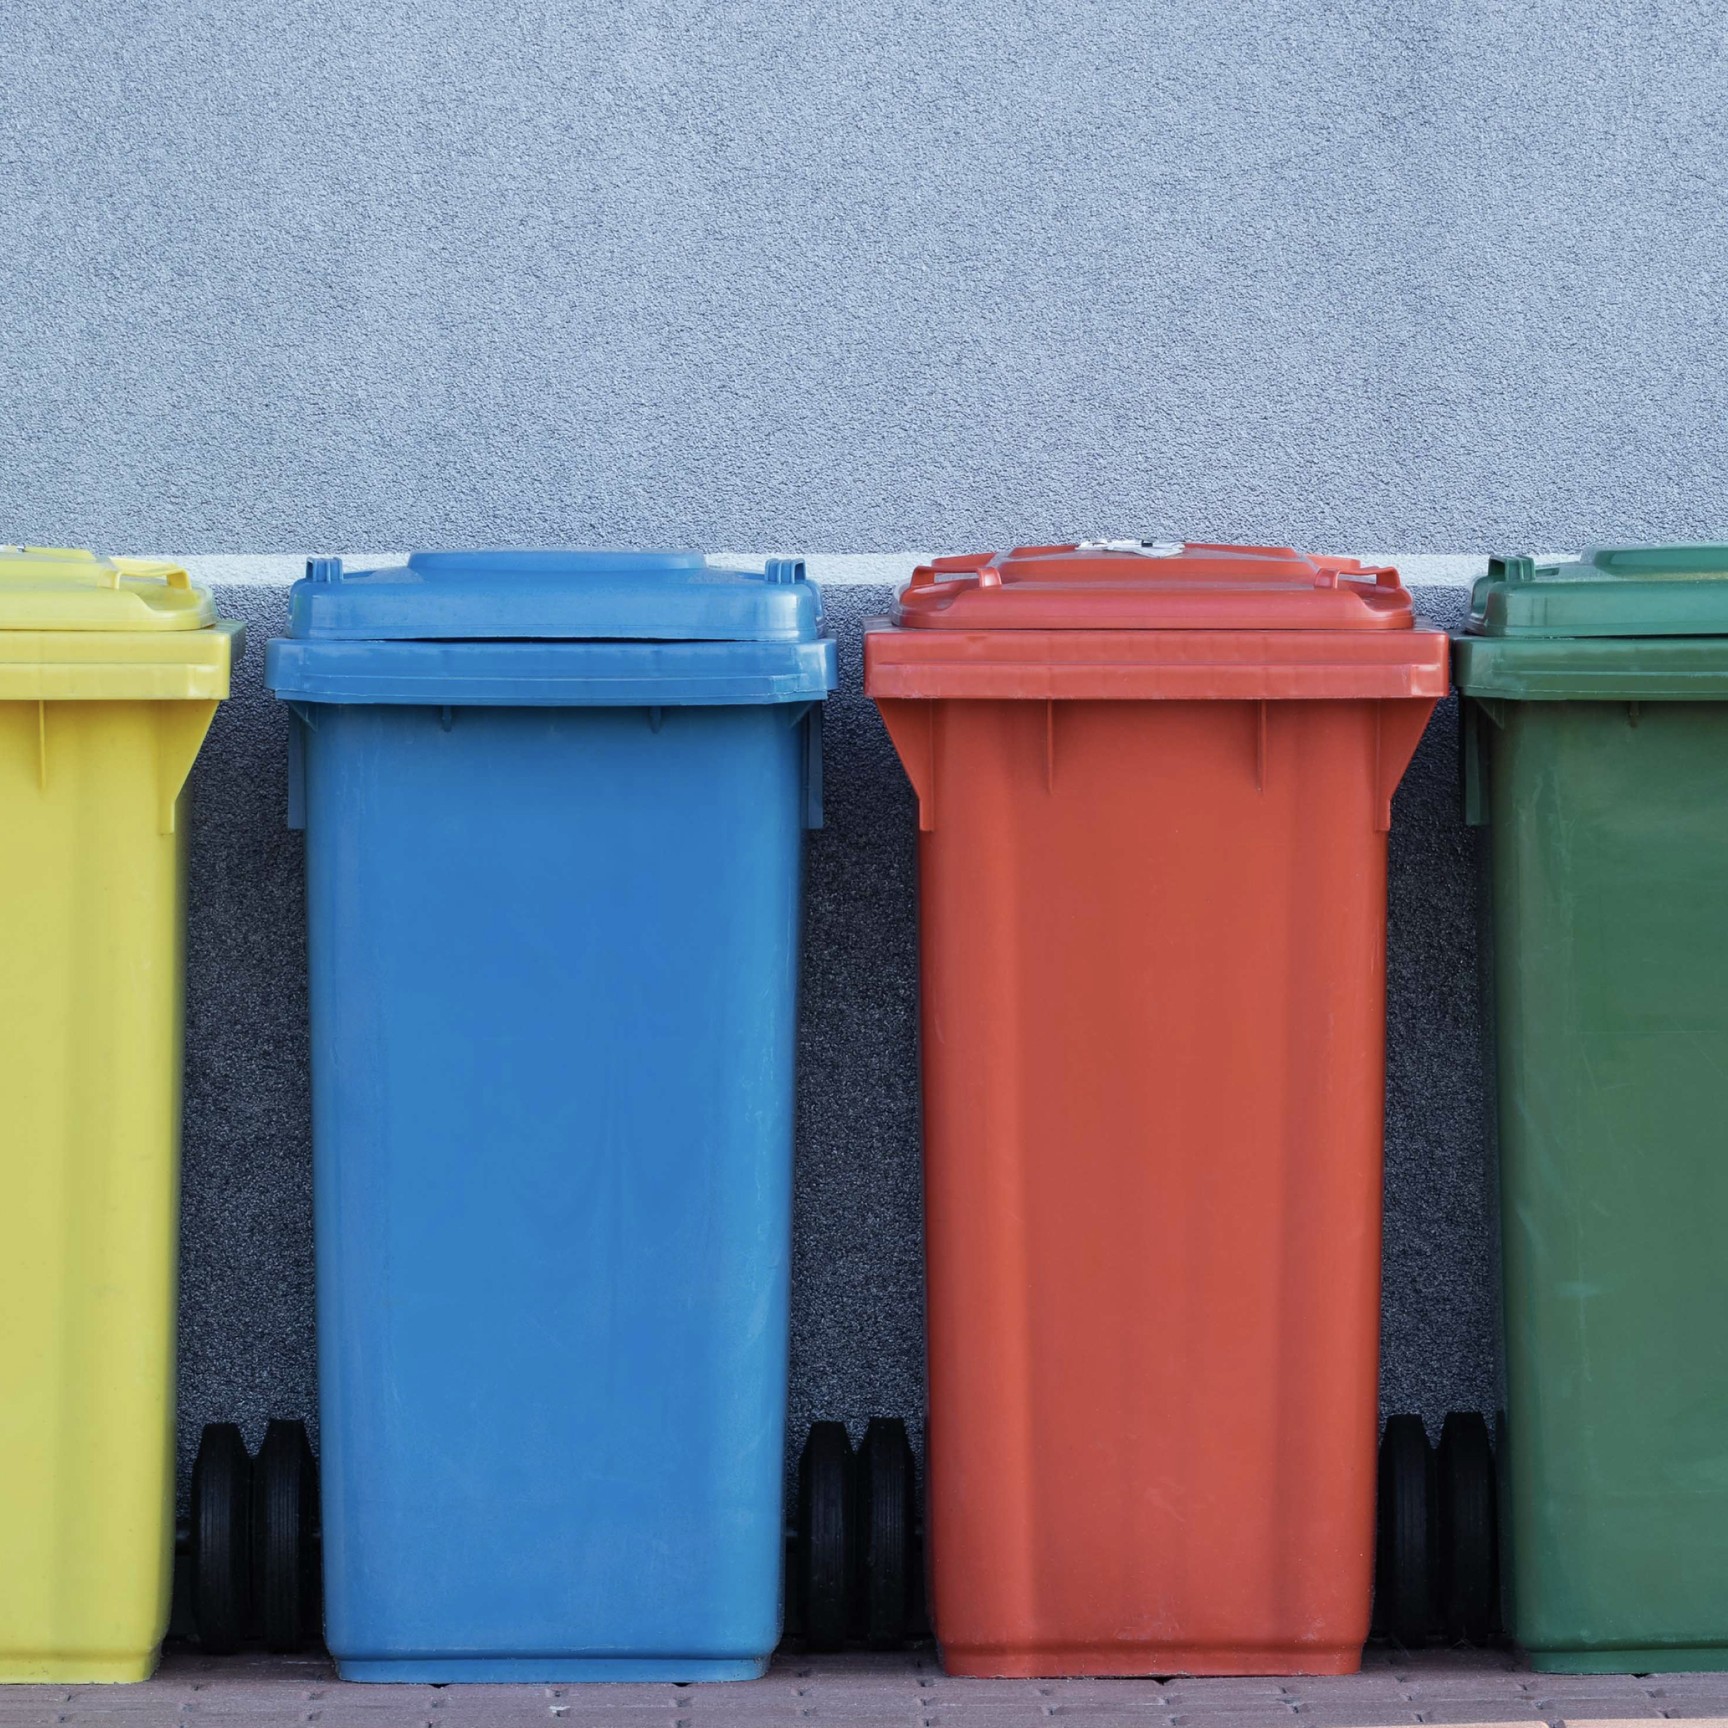 Colourful trash bins